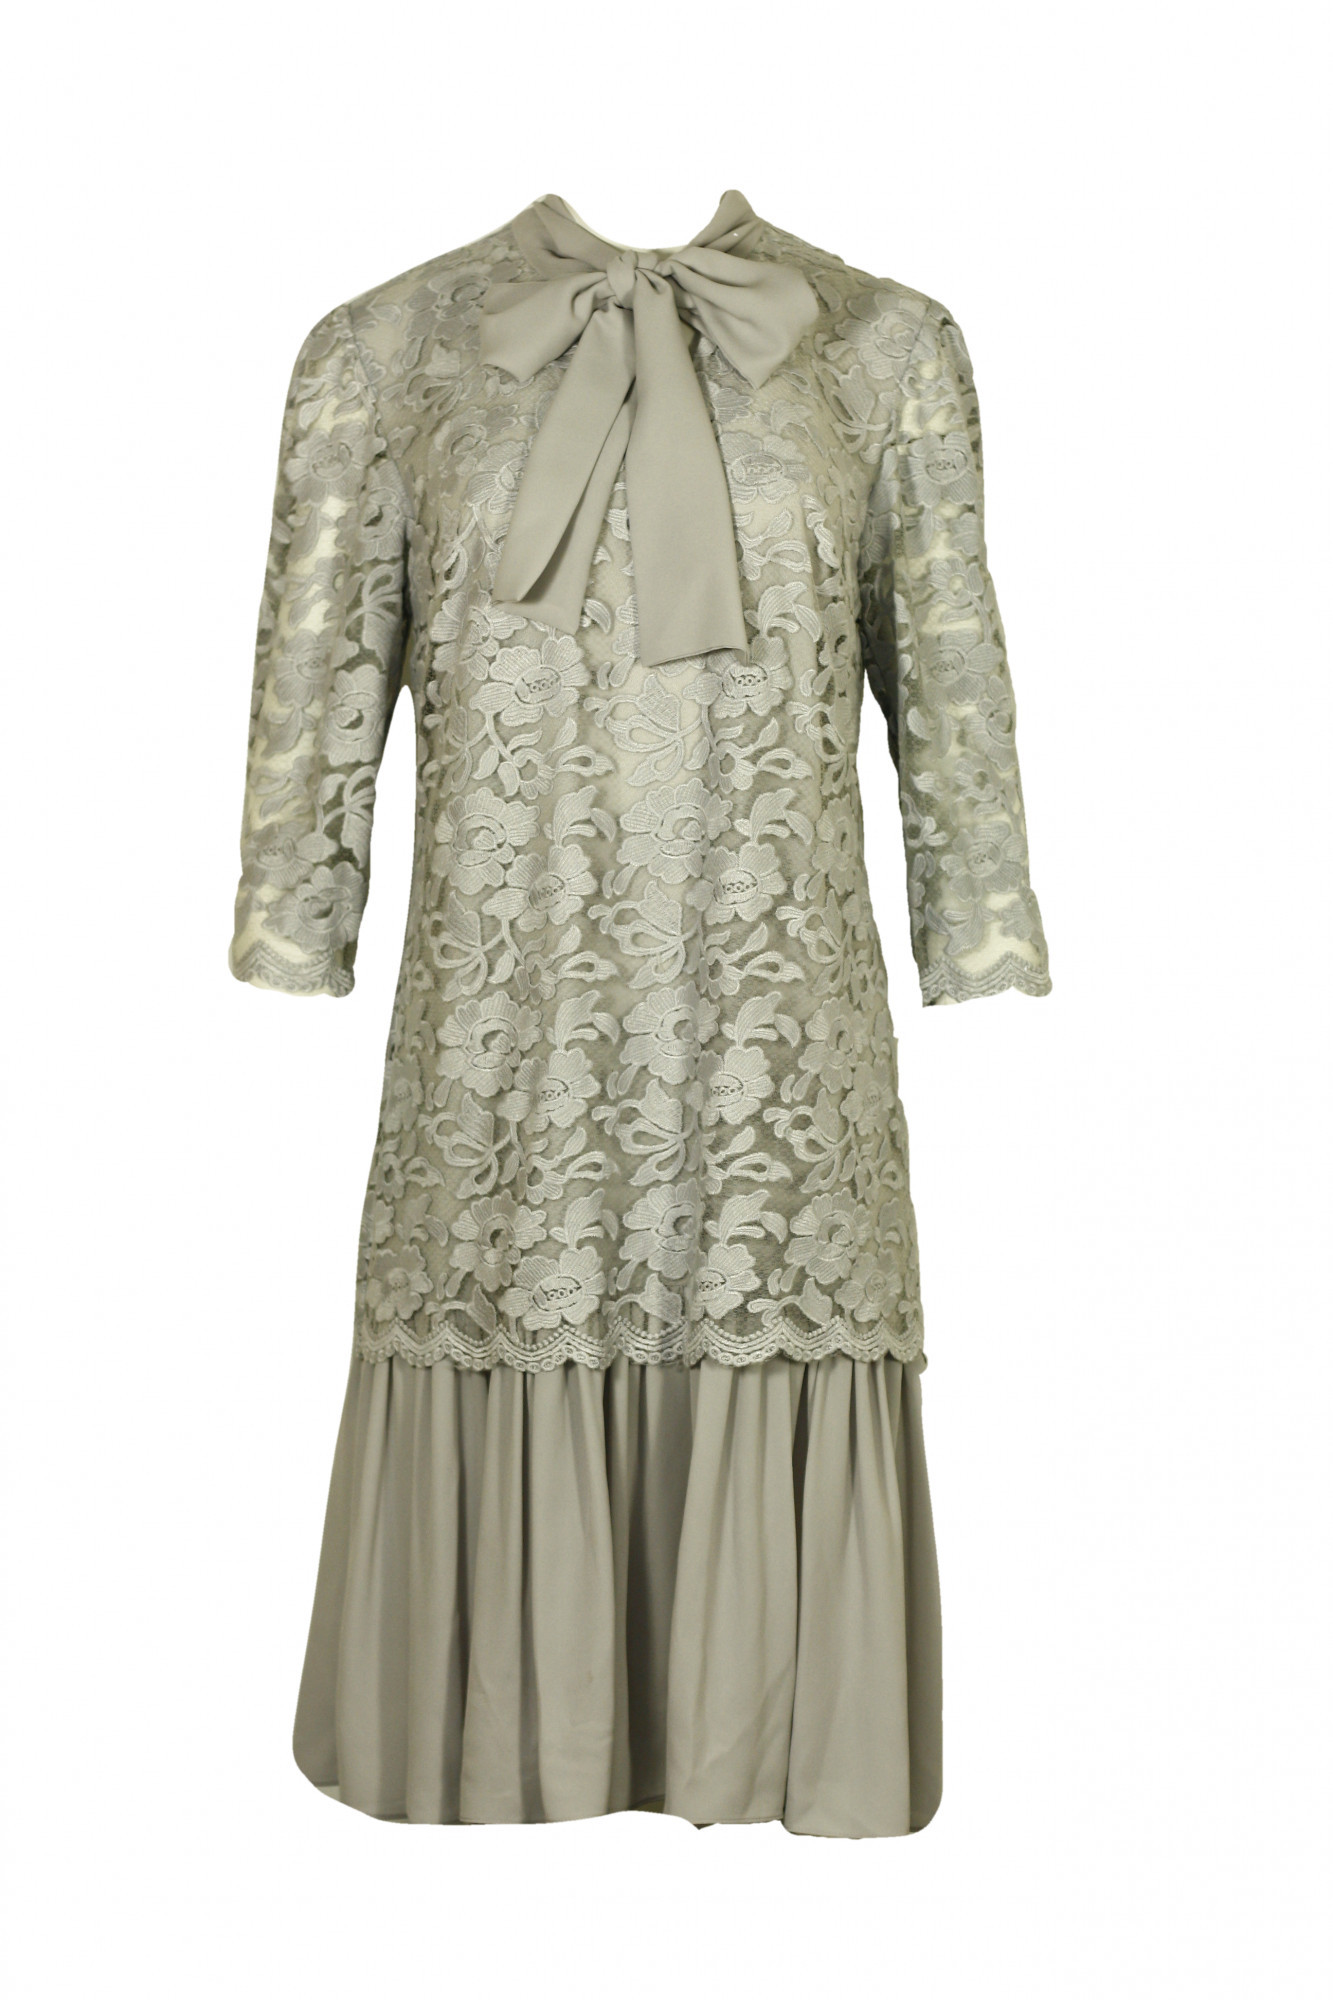 Dámské krajkované šaty s vázačkou a volánem - 0220M18 Glam šedá 42